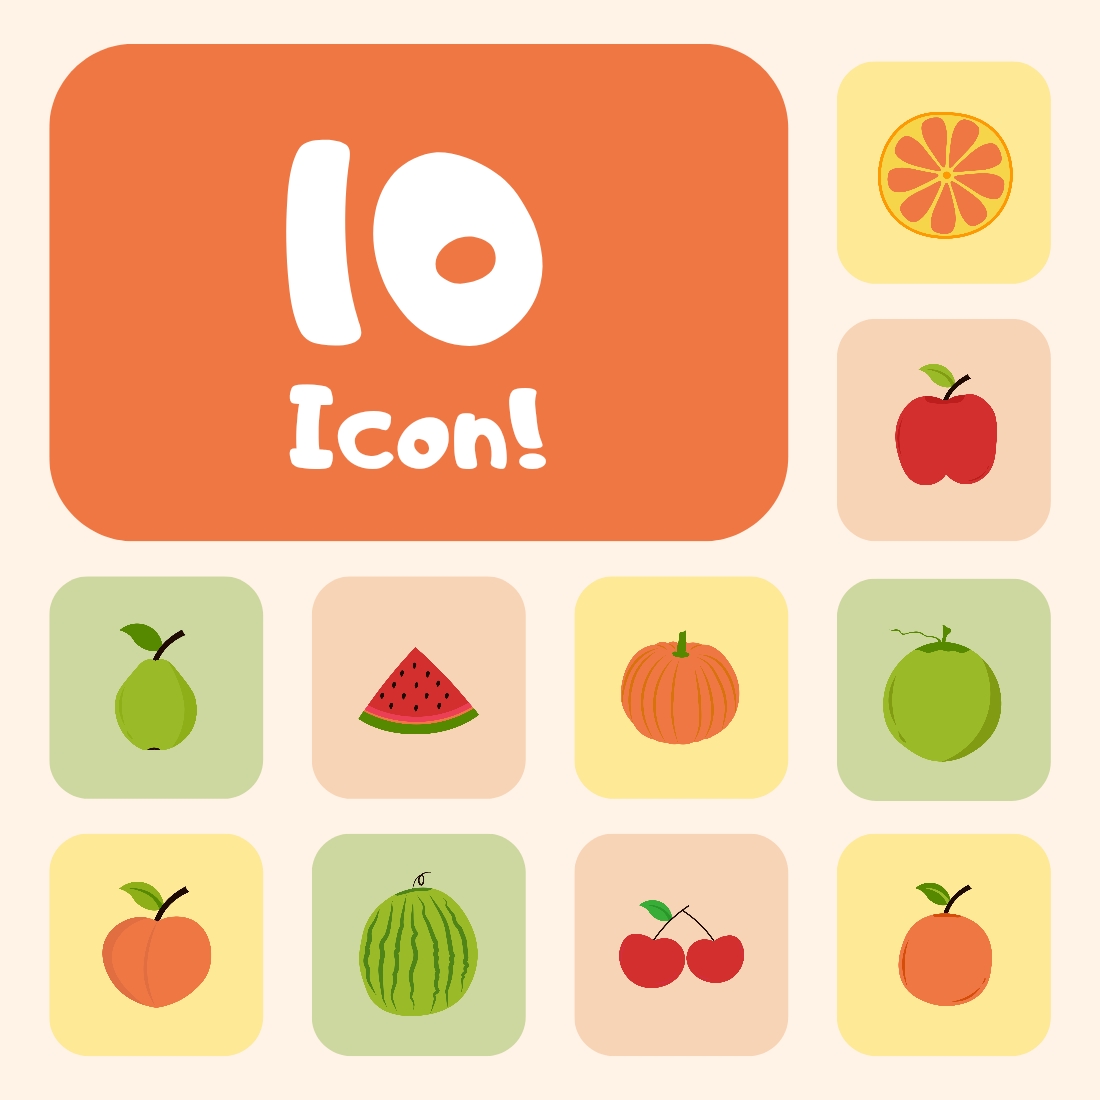 10 Fruit Icon Illustration cover image.